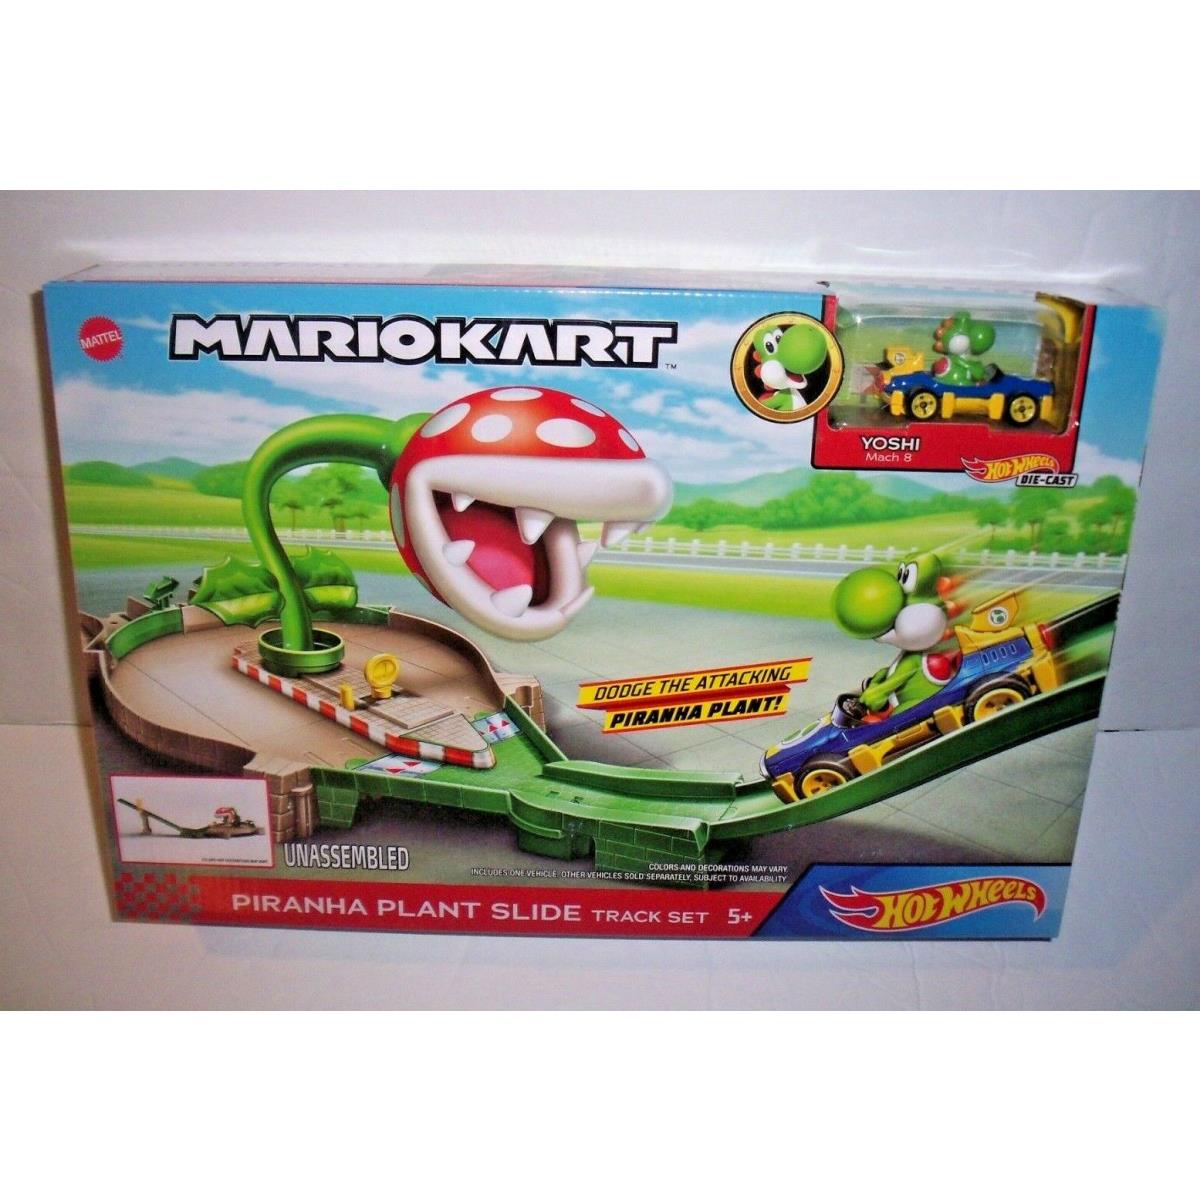 Hot Wheels Mariokart Piranha Plant Slide Track Set Yoshi Mach 8 887961773231